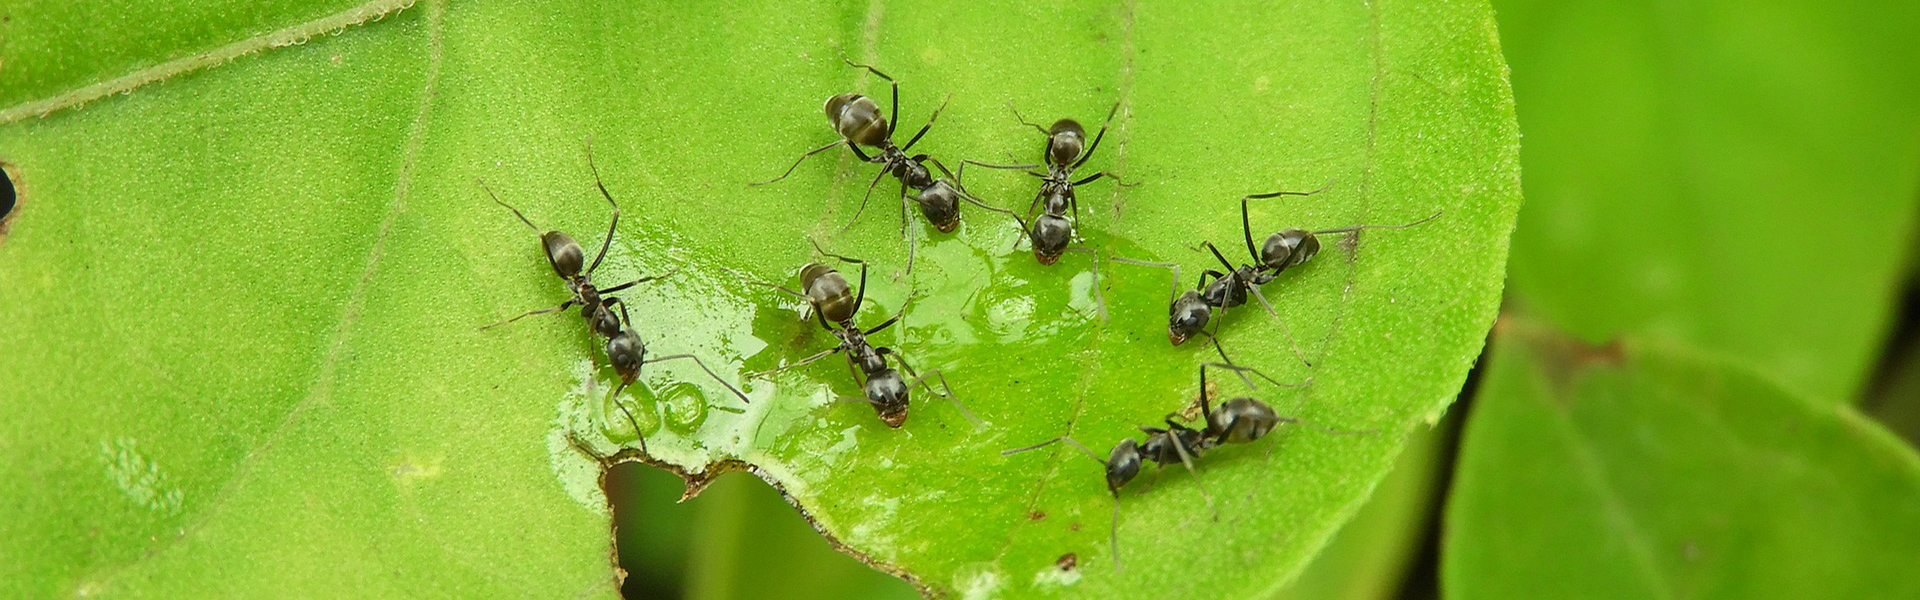 Get Rid Of Ants In The Garden